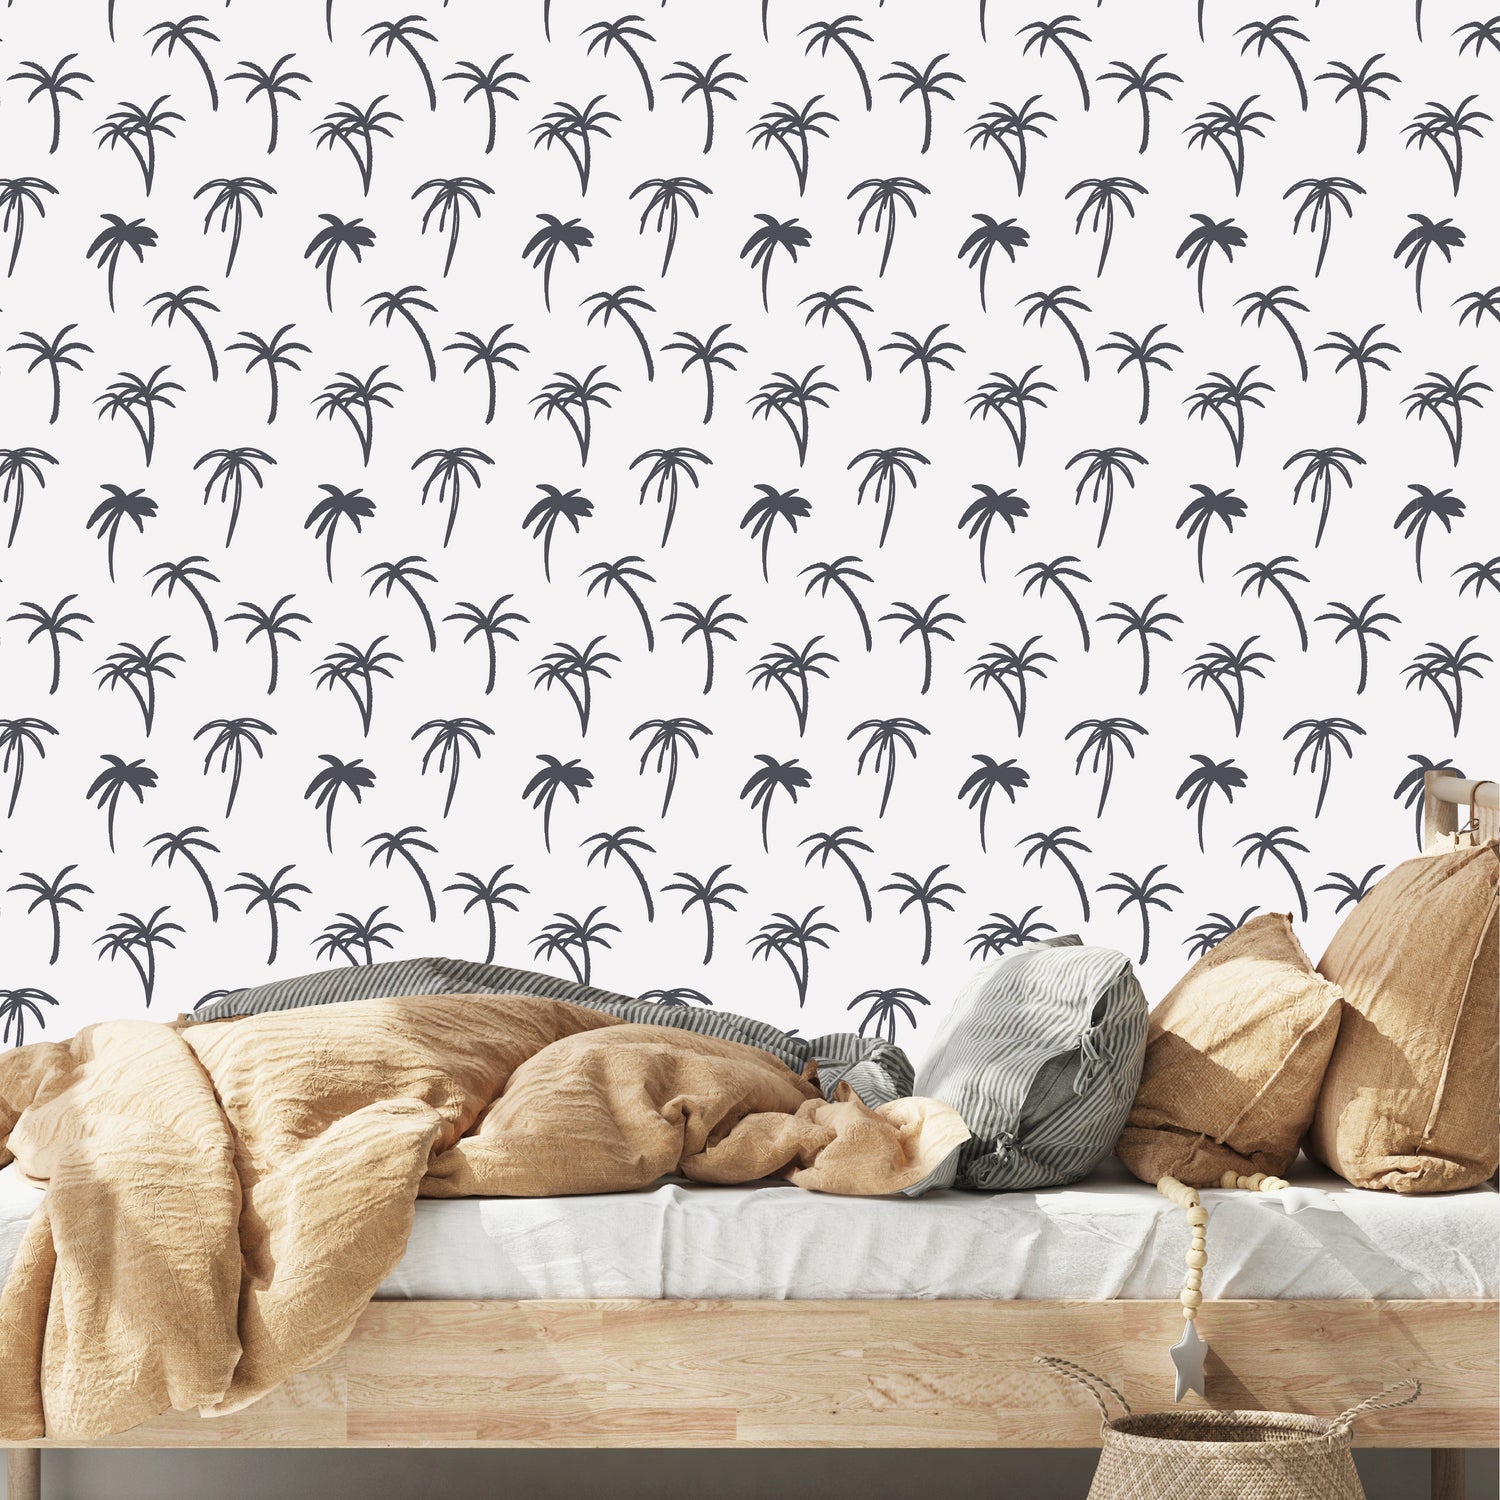 Navy Noa Tropical Palm Wallpaper | Sample - Munks and Me Wallpaper